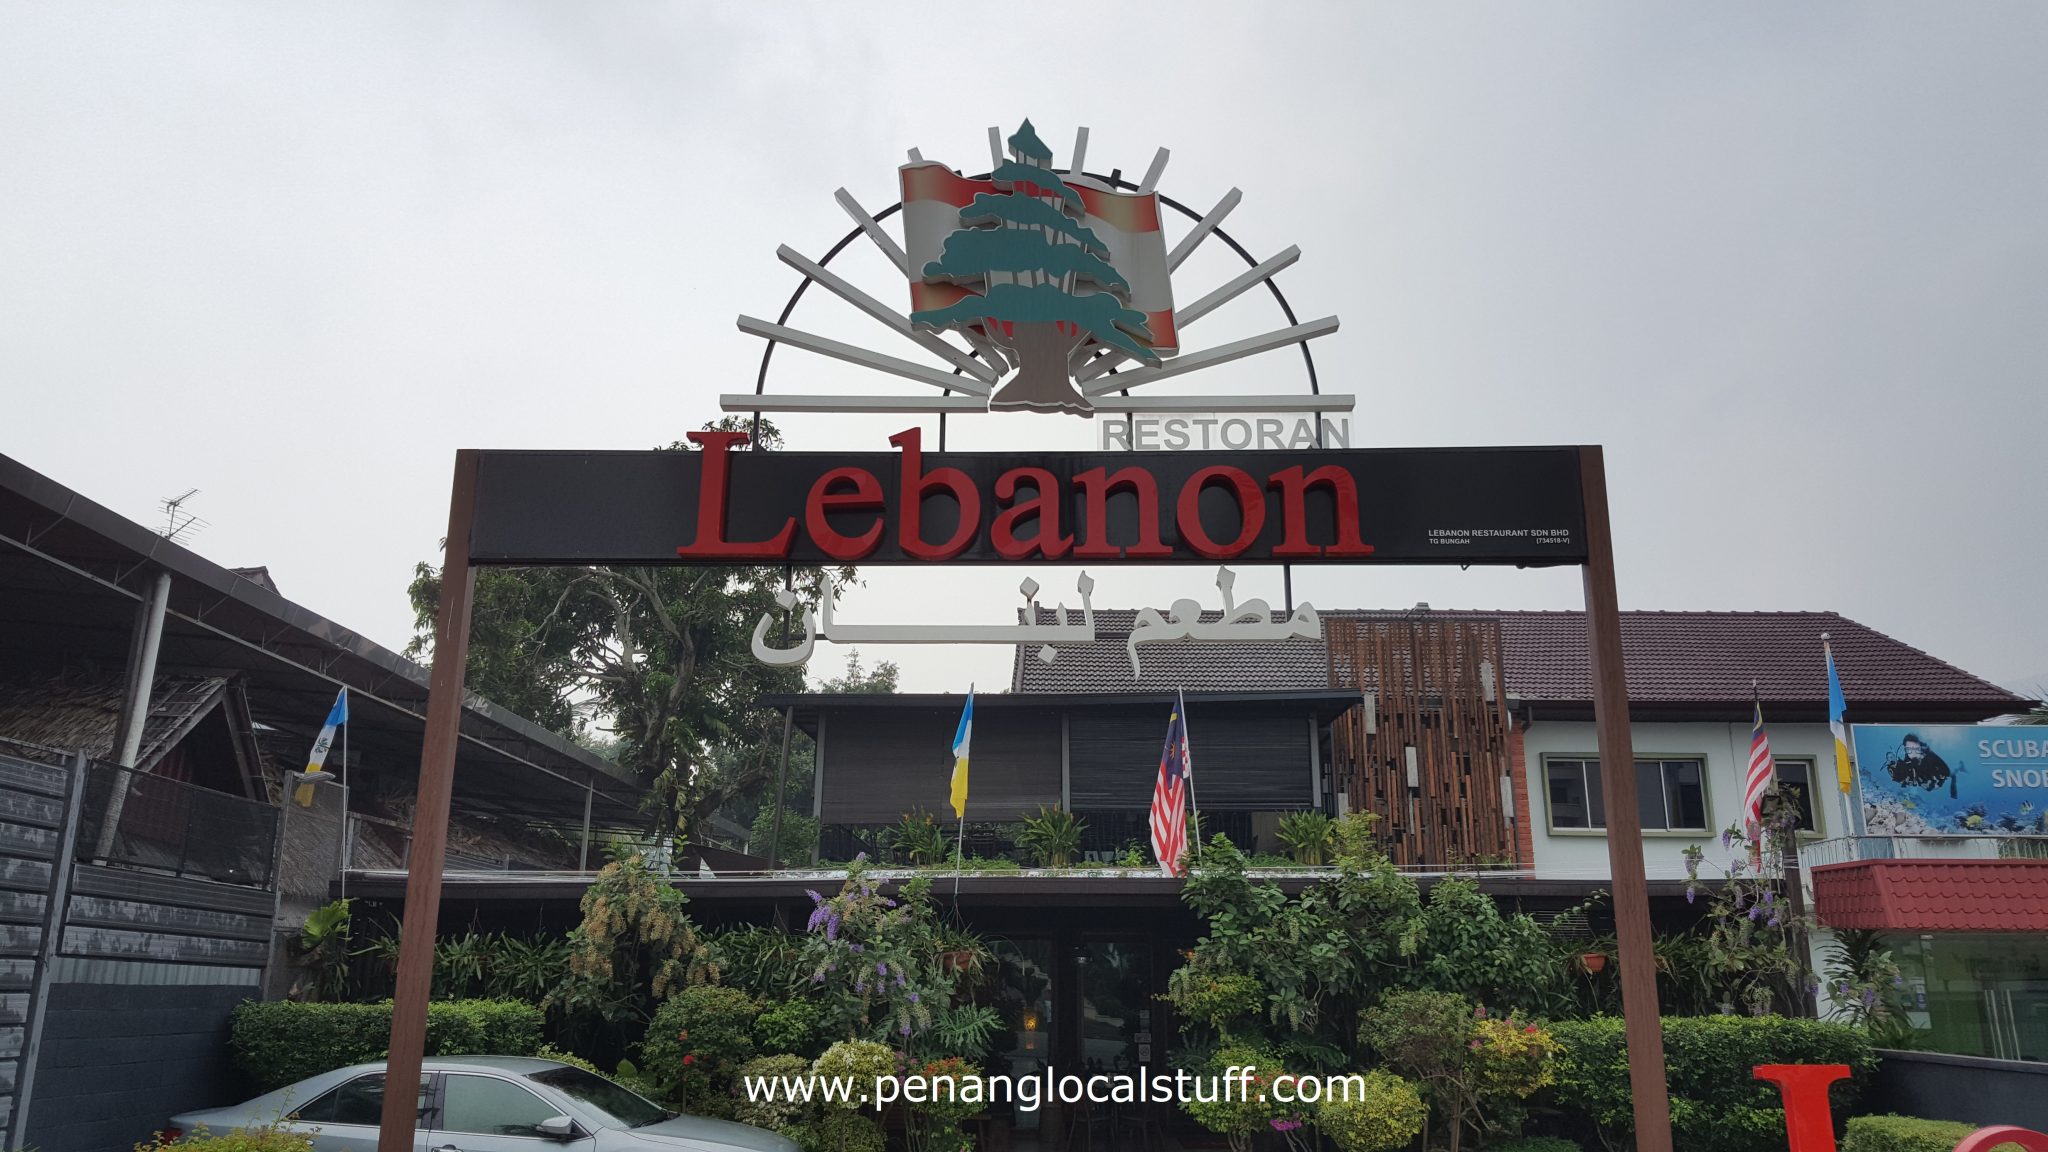 The Garden Lebanon Restaurant, Tanjung Bungah, Penang - Penang Local Stuff